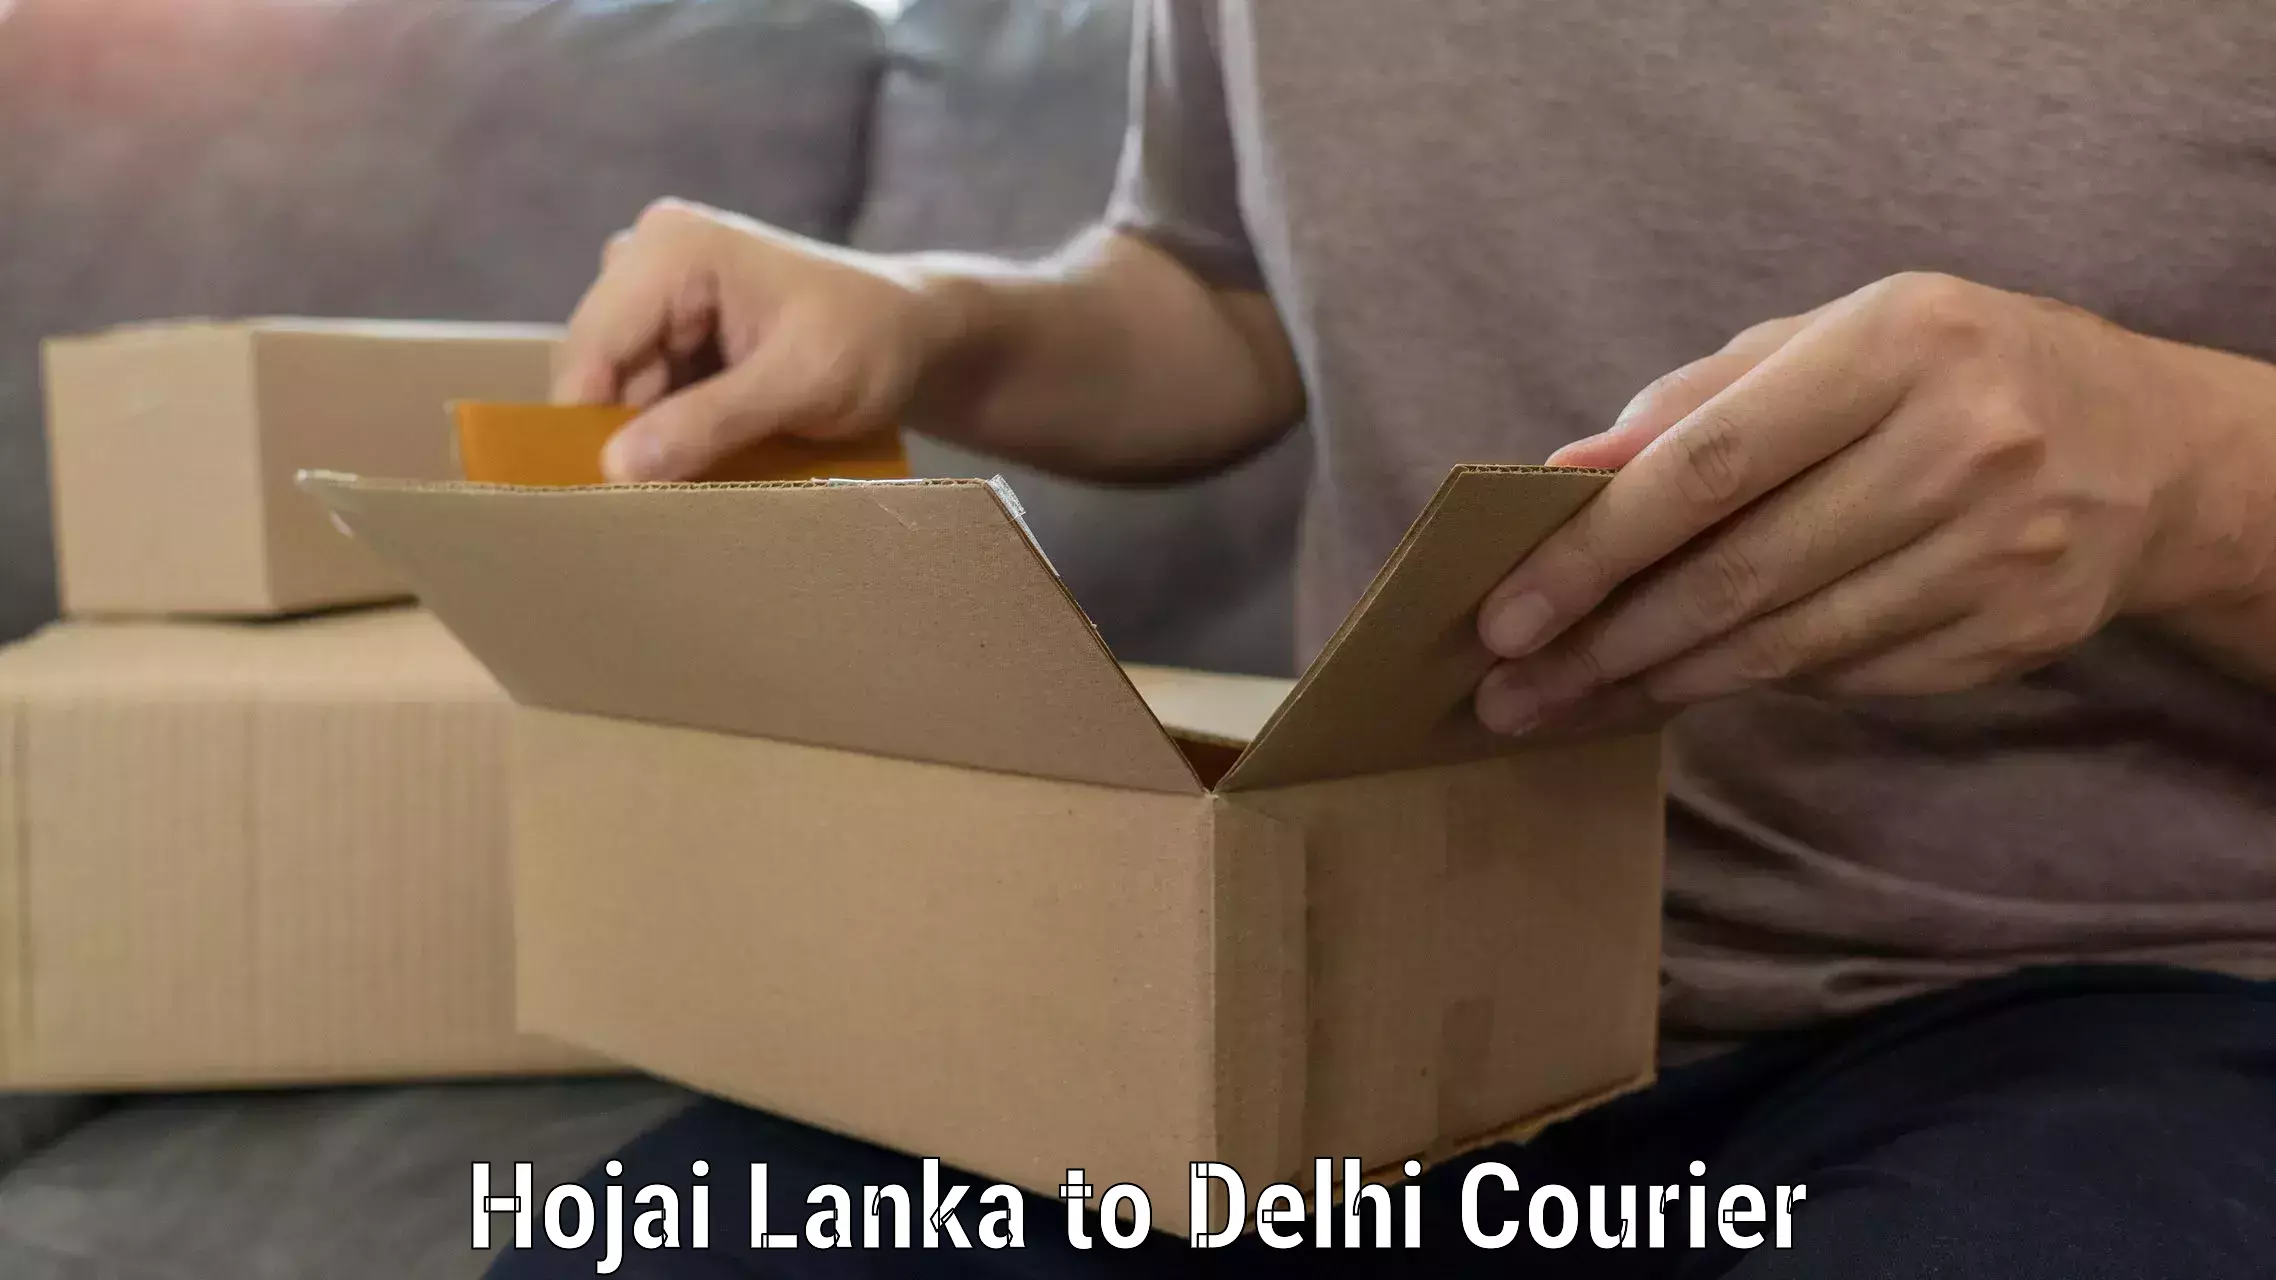 Full-service furniture transport Hojai Lanka to University of Delhi